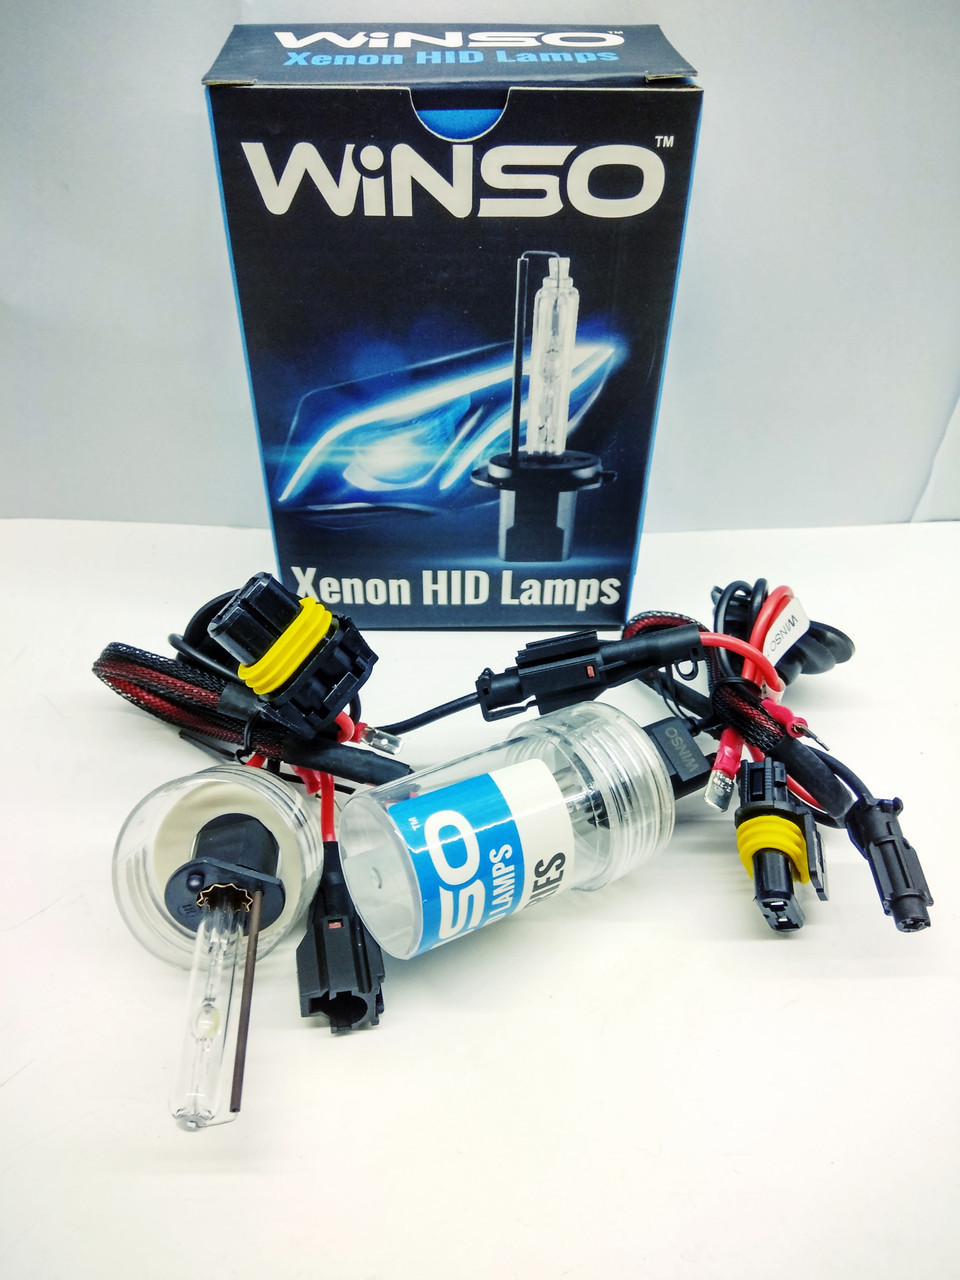 Лампа ксенонова Winso H1, 4300K, 85V, 35W, P14.5s KET, 2 шт.